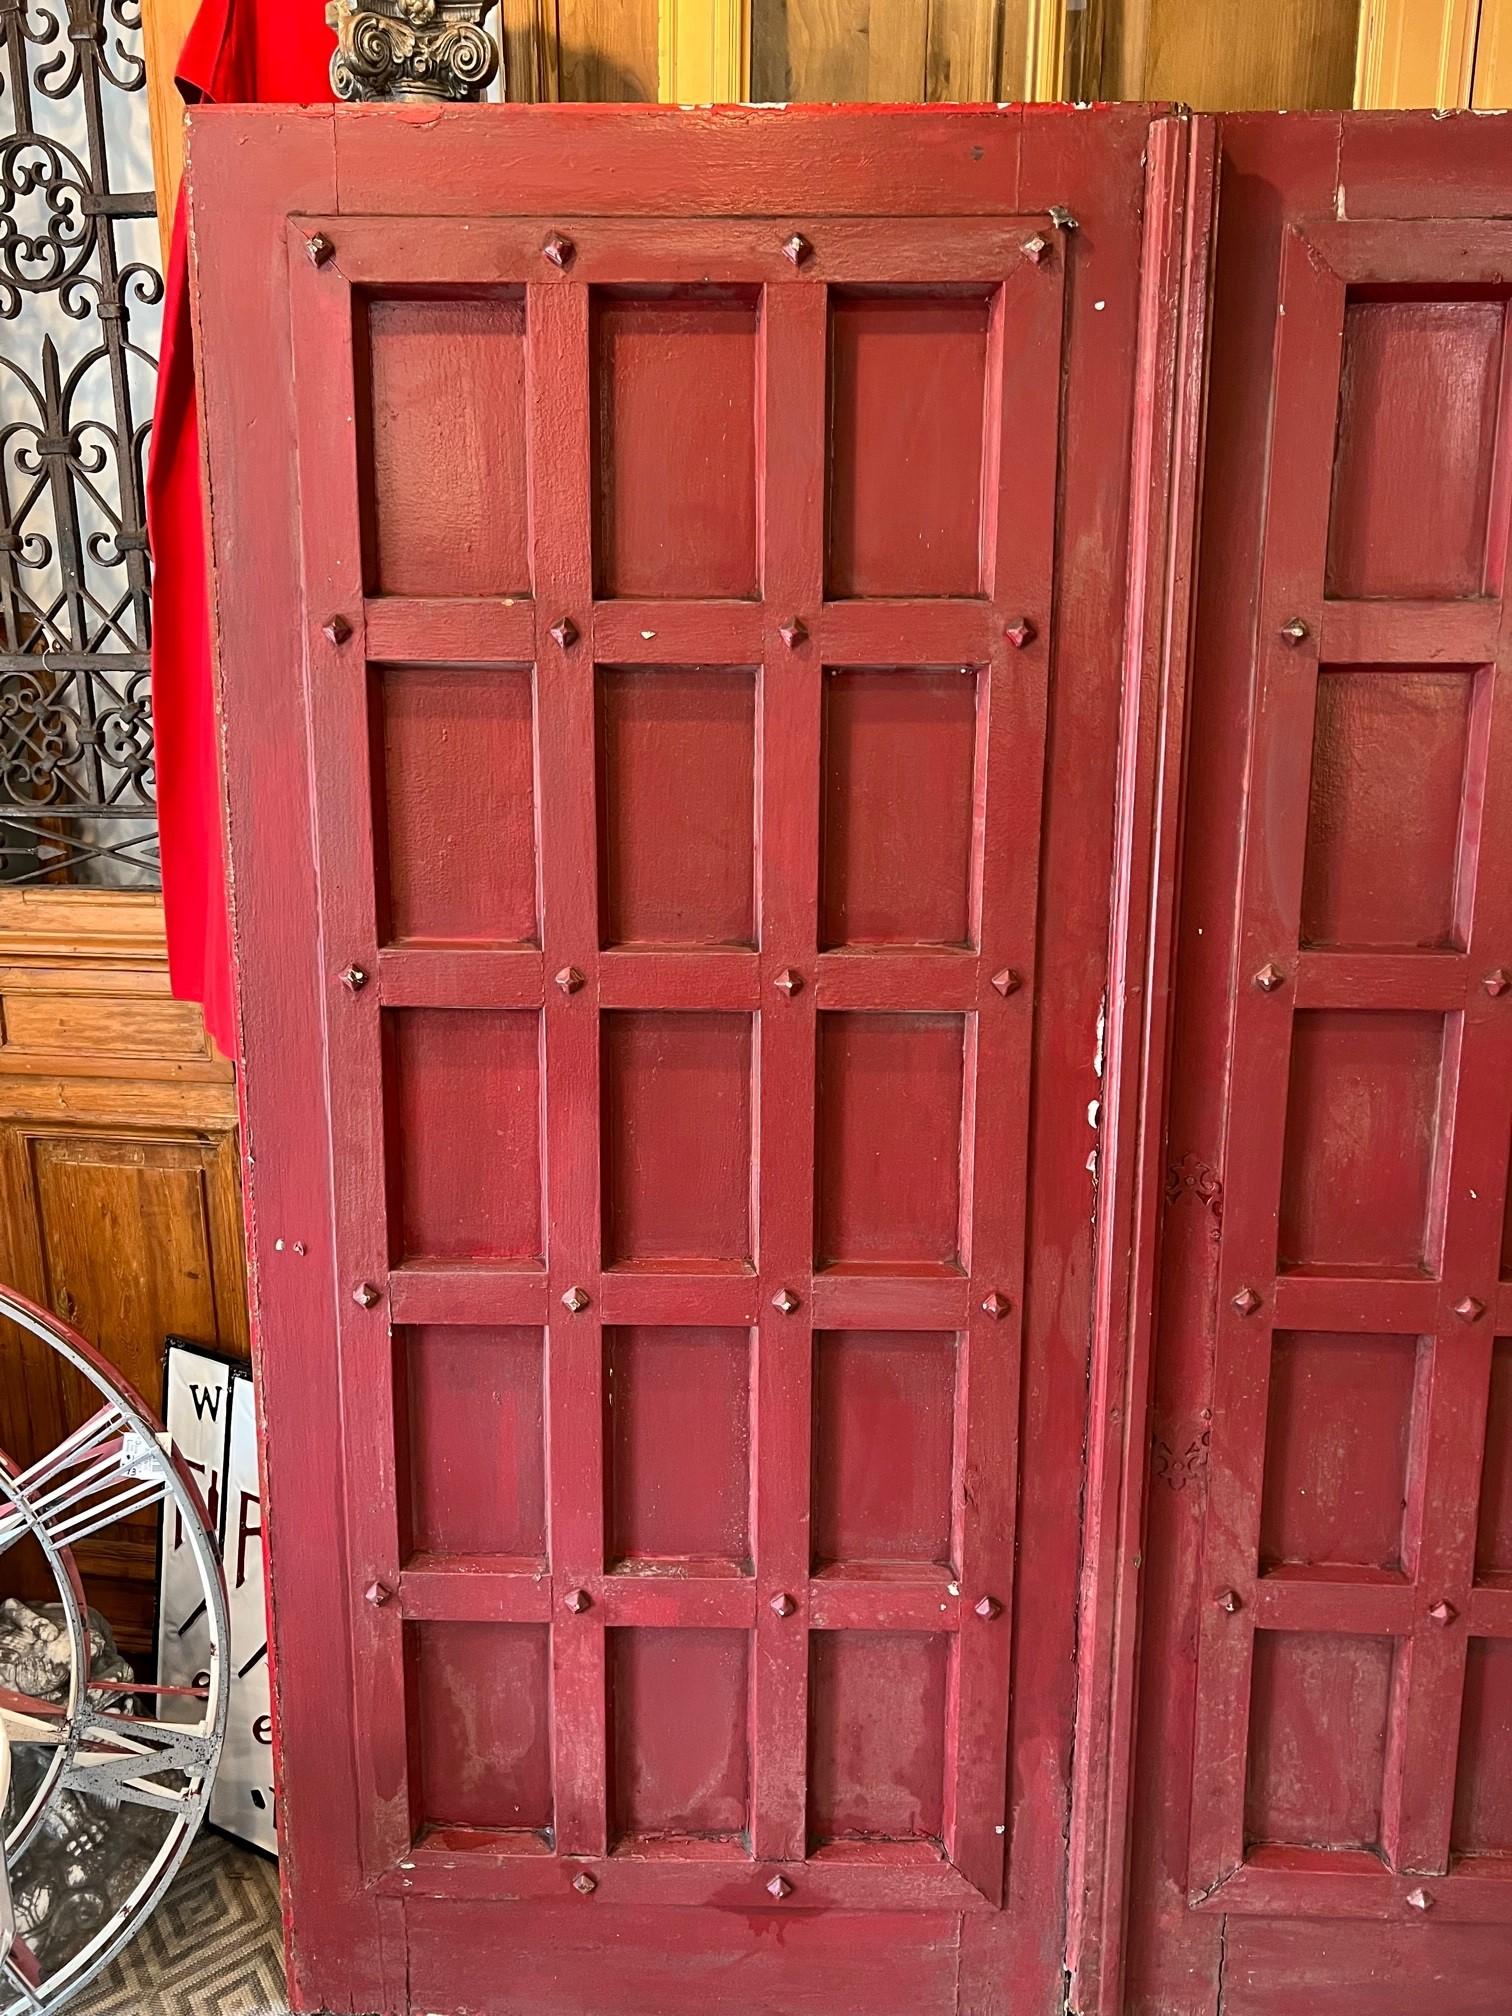 photos de portes anciennes